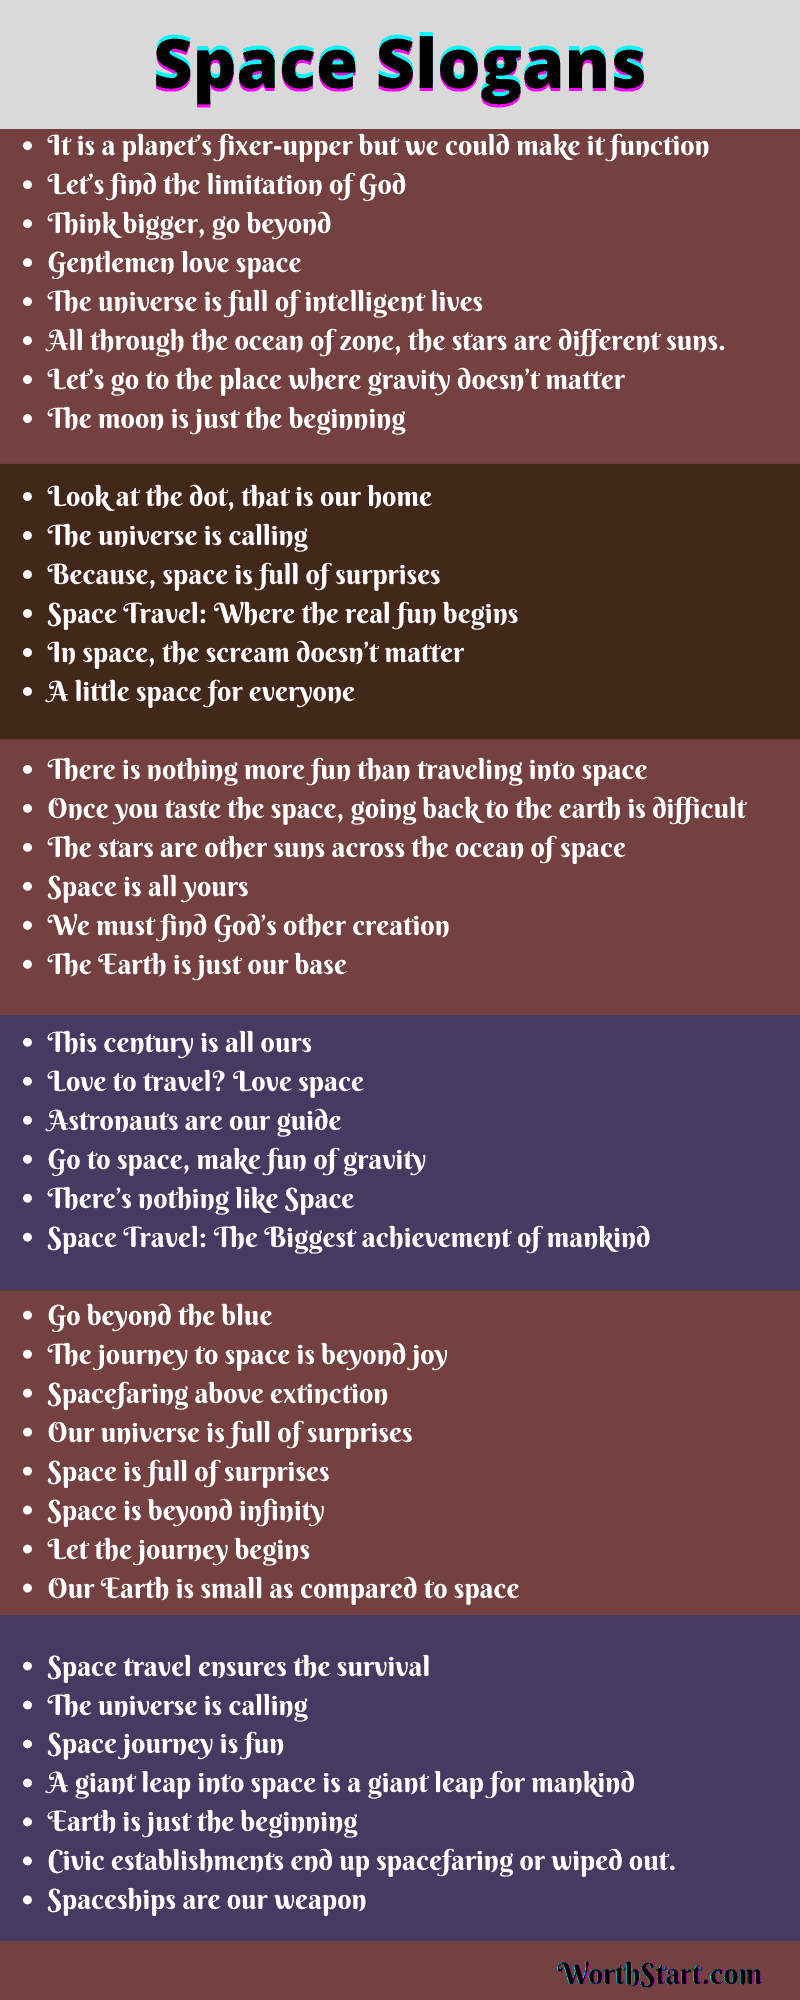 Space Slogans